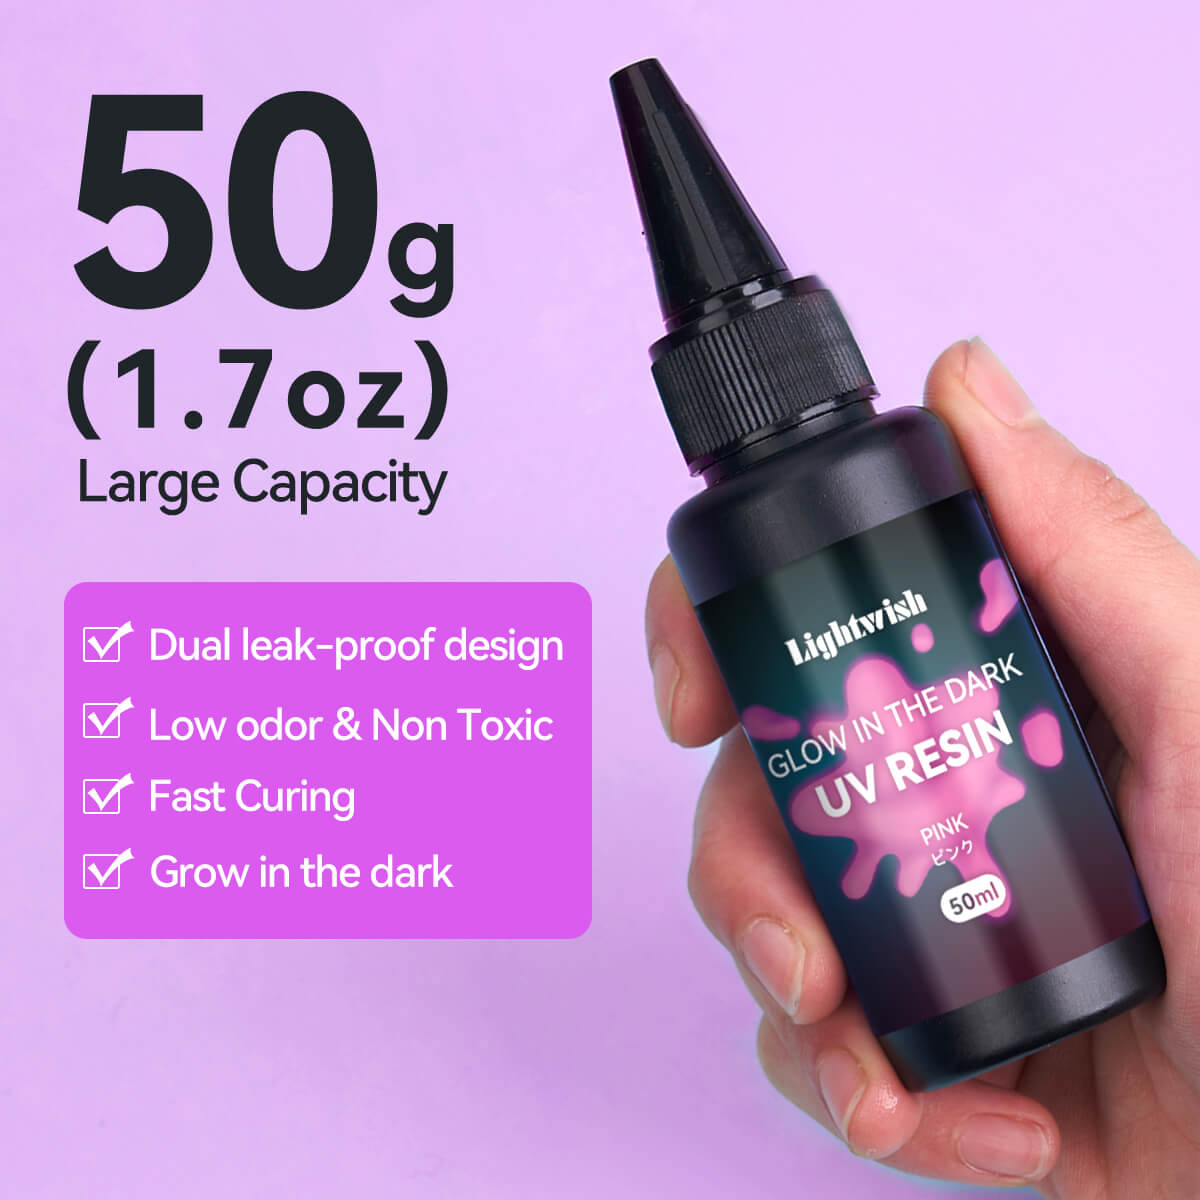 Lightwish Glow in The Dark UV Resin 400g, 8 Colors